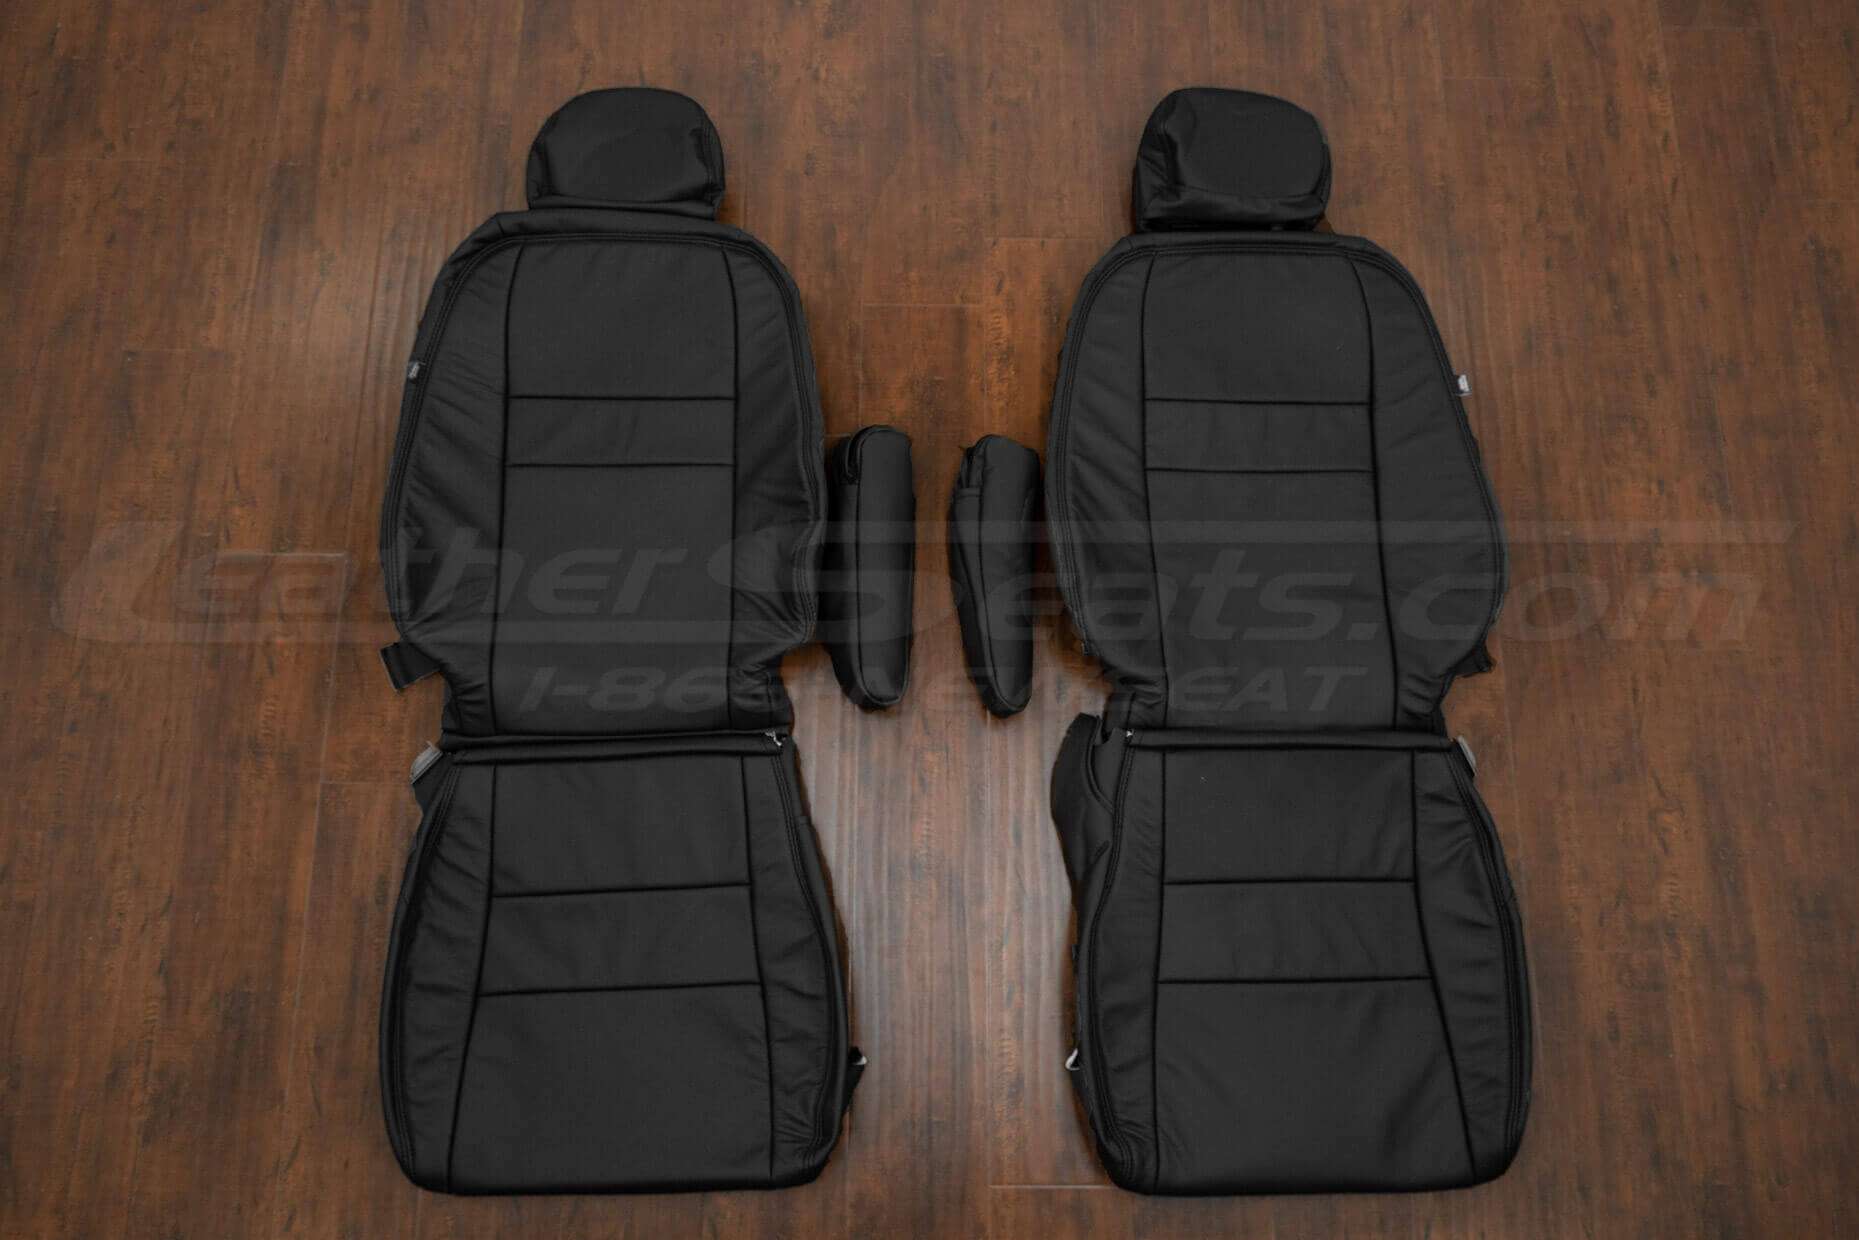 2010-2011 Honda CR-V Leather Seat Interior Kit - Black - Front seat upholstery w/ Armrests